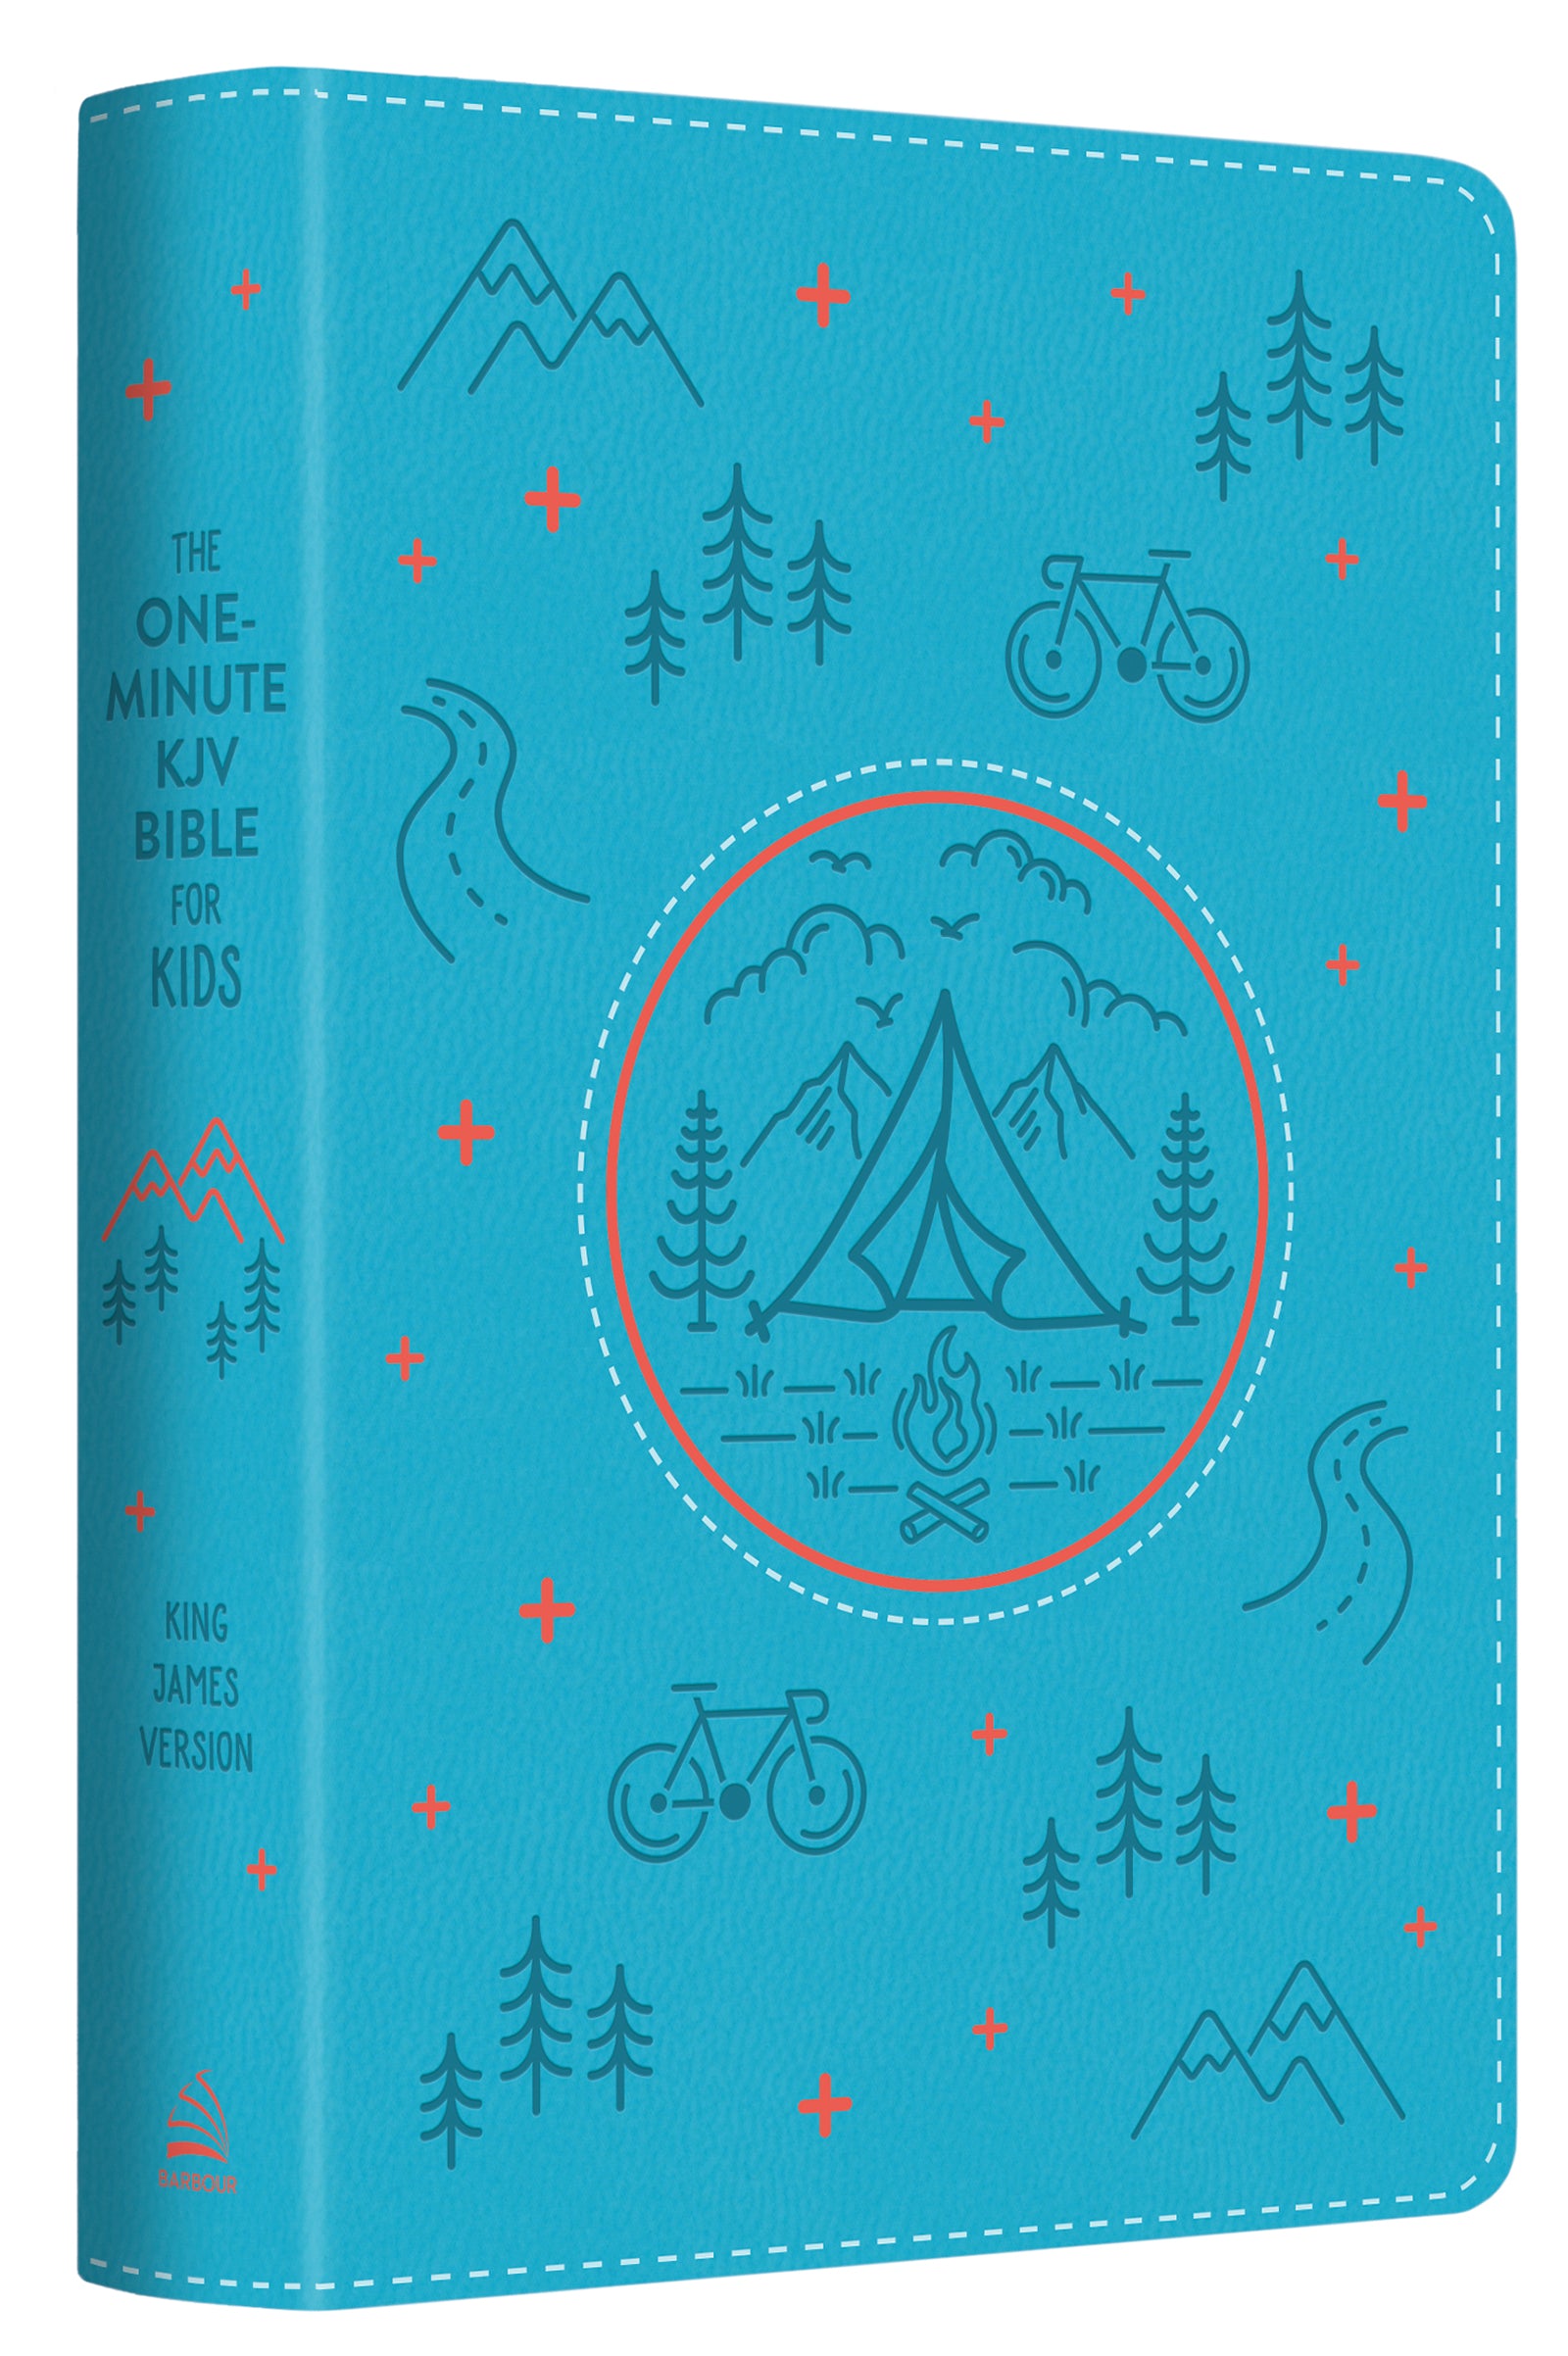 The One-Minute KJV Bible for Kids [Adventure Blue] - Mercantile Mountain